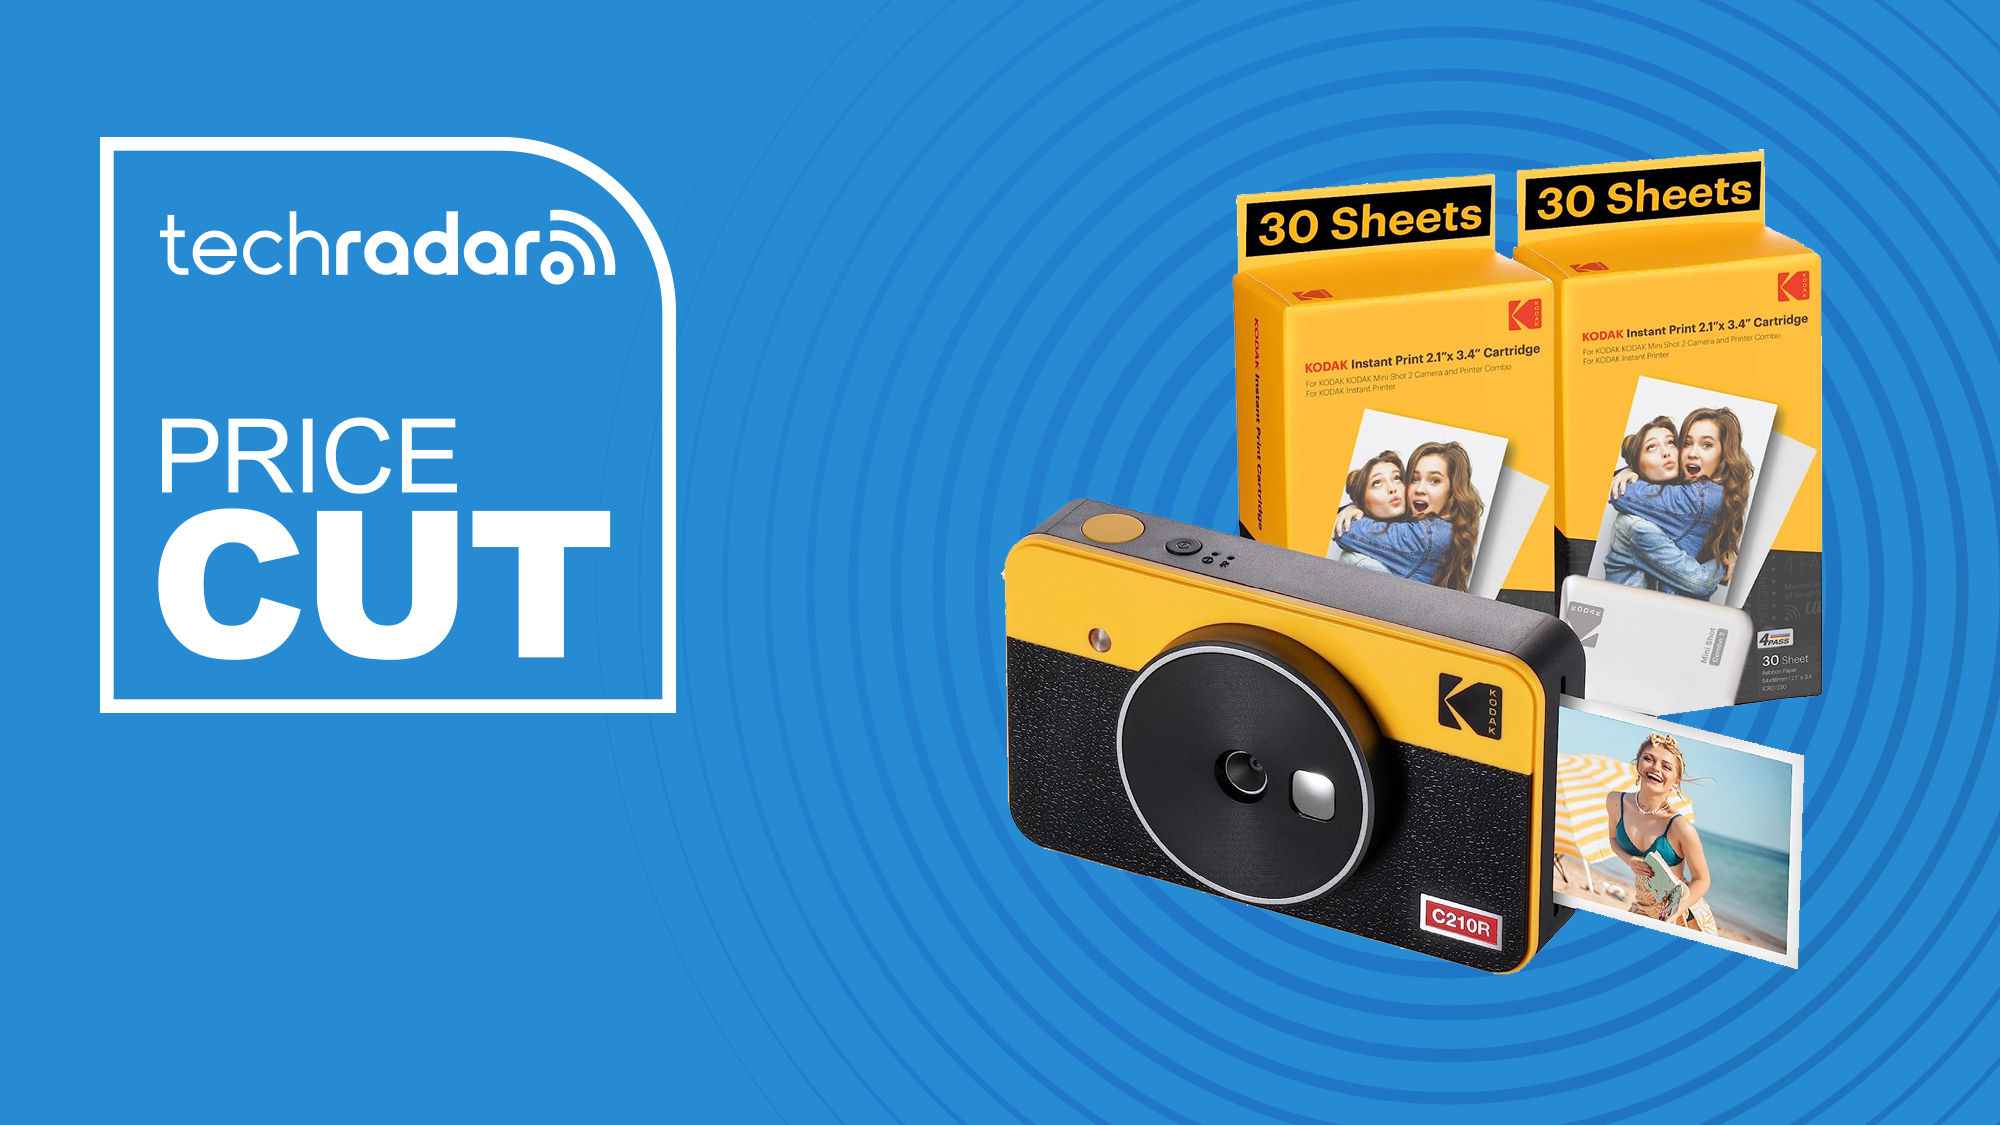 Kodak Mini 2 Retro (2 stores) find the best price now »